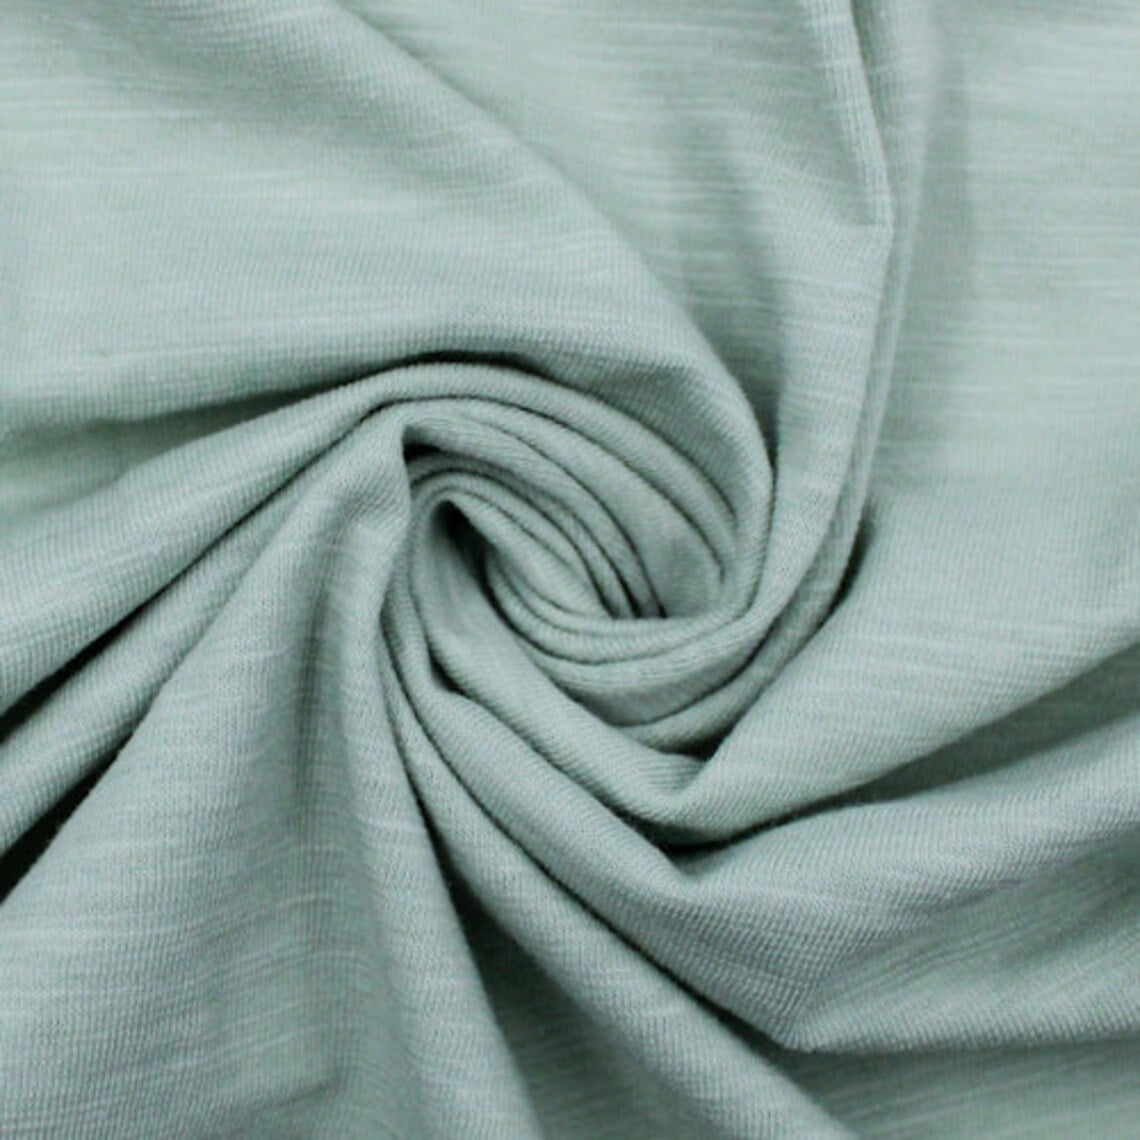 FREE SHIPPING!!! Greenish Solid Slub Cotton Spandex Jersey Knit Fabric, DIY  Projects by the Yard - Walmart.com